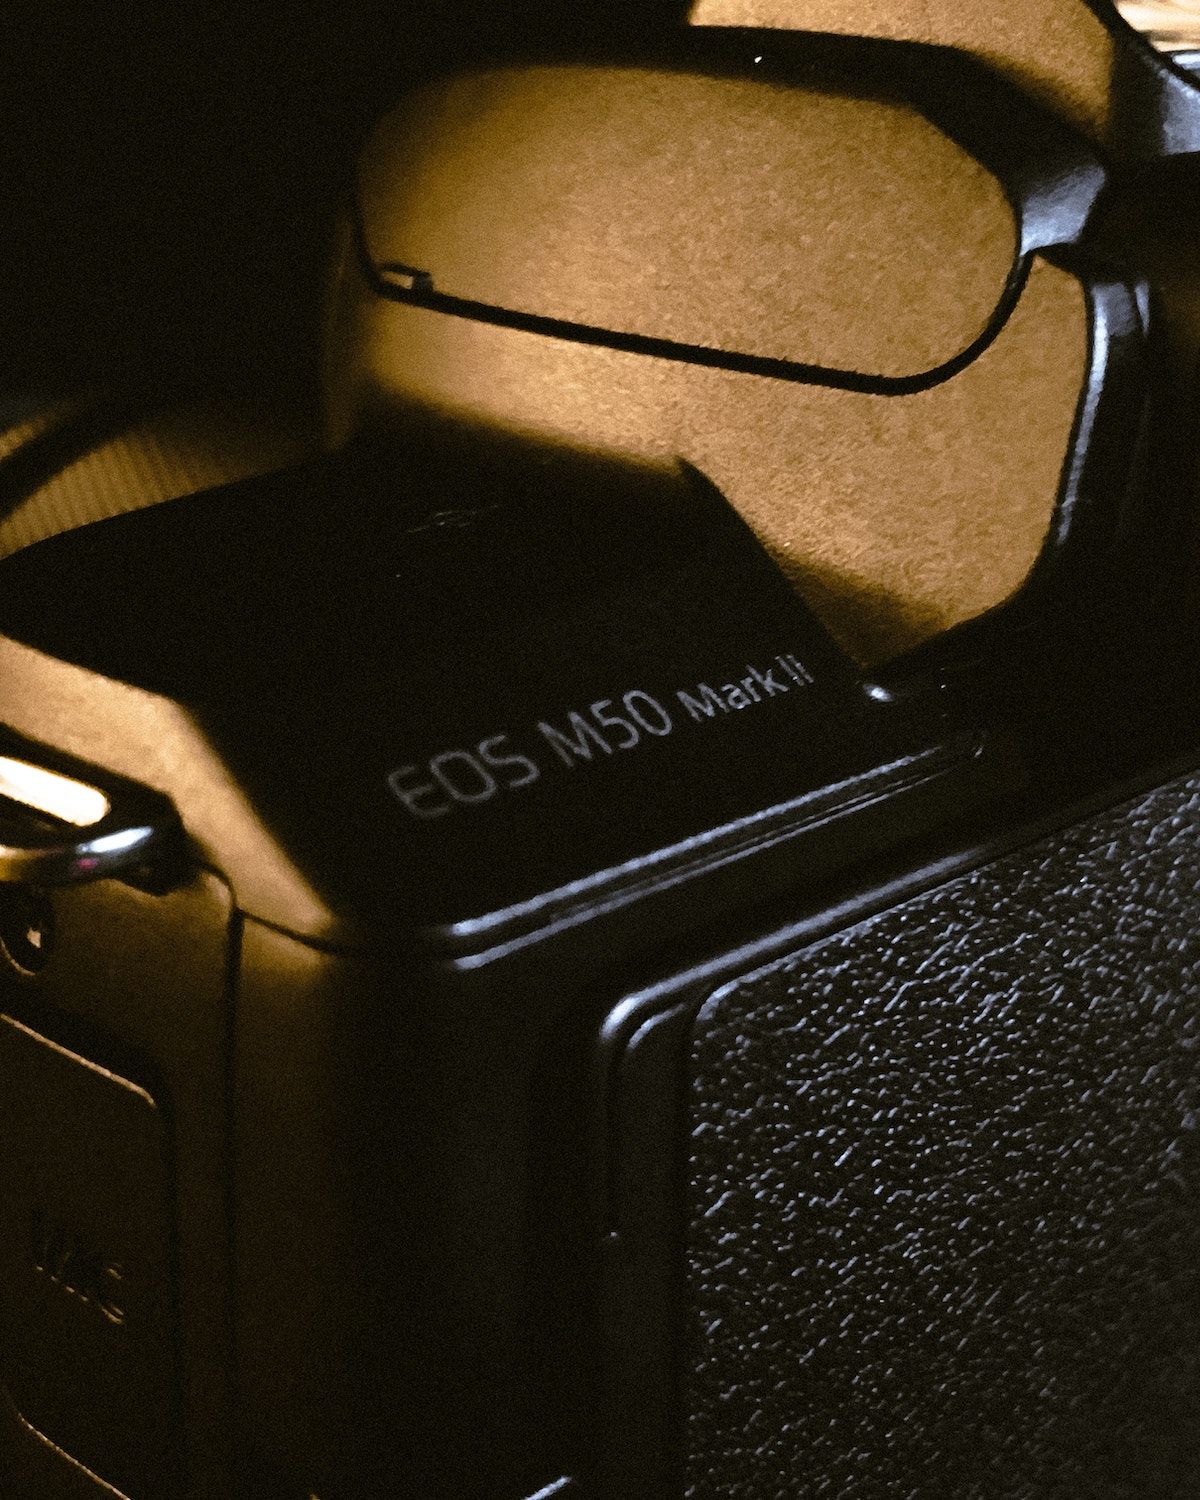 Canon EOS M50 Mark II body and handling